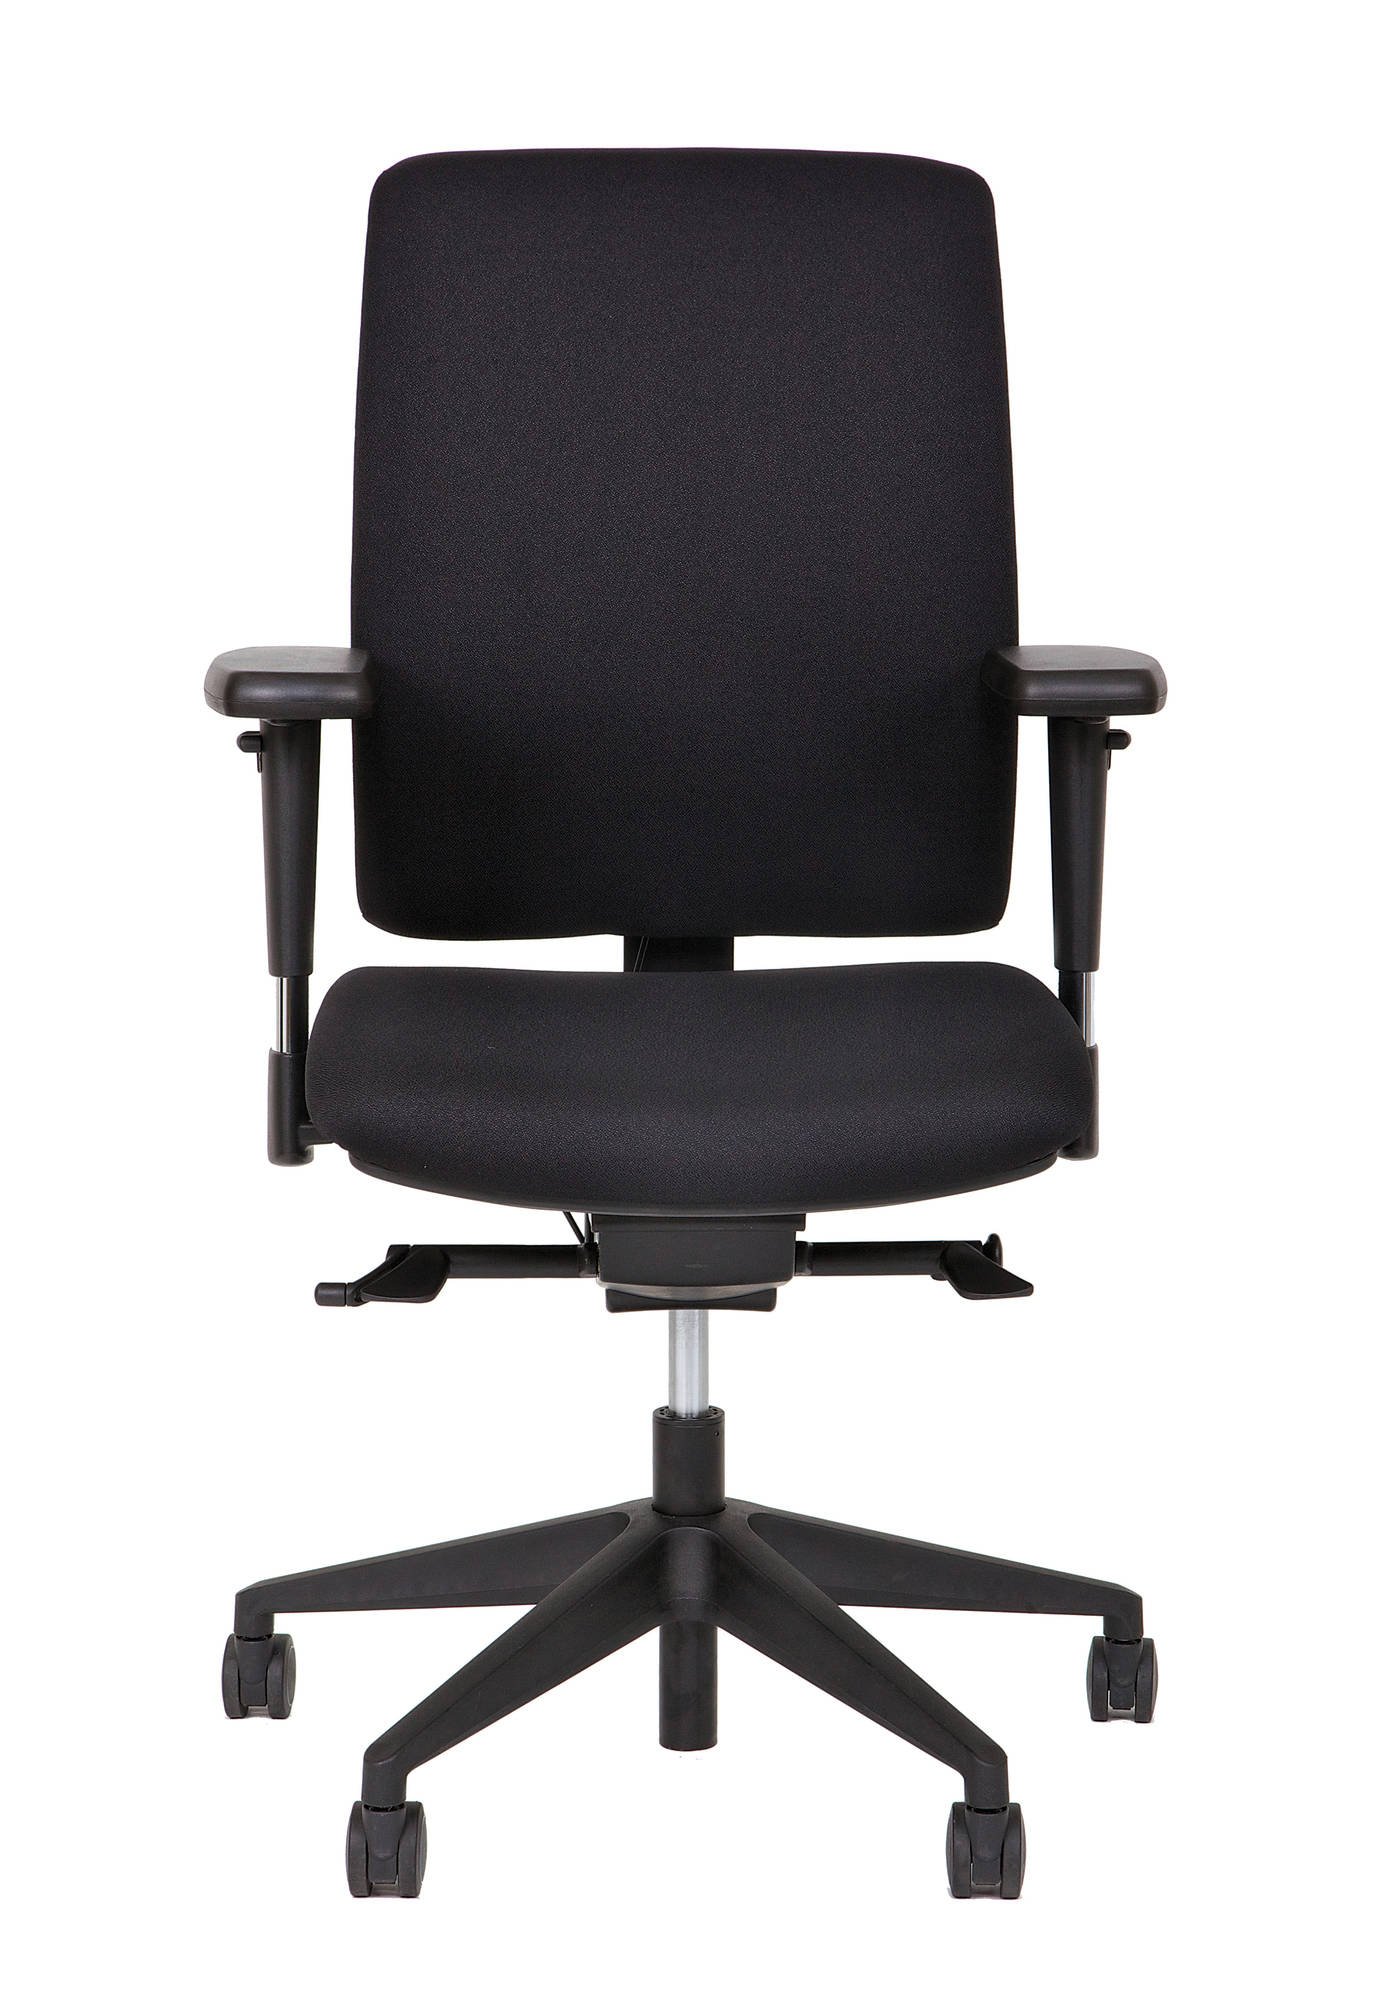 Office chair ergonomic Pina